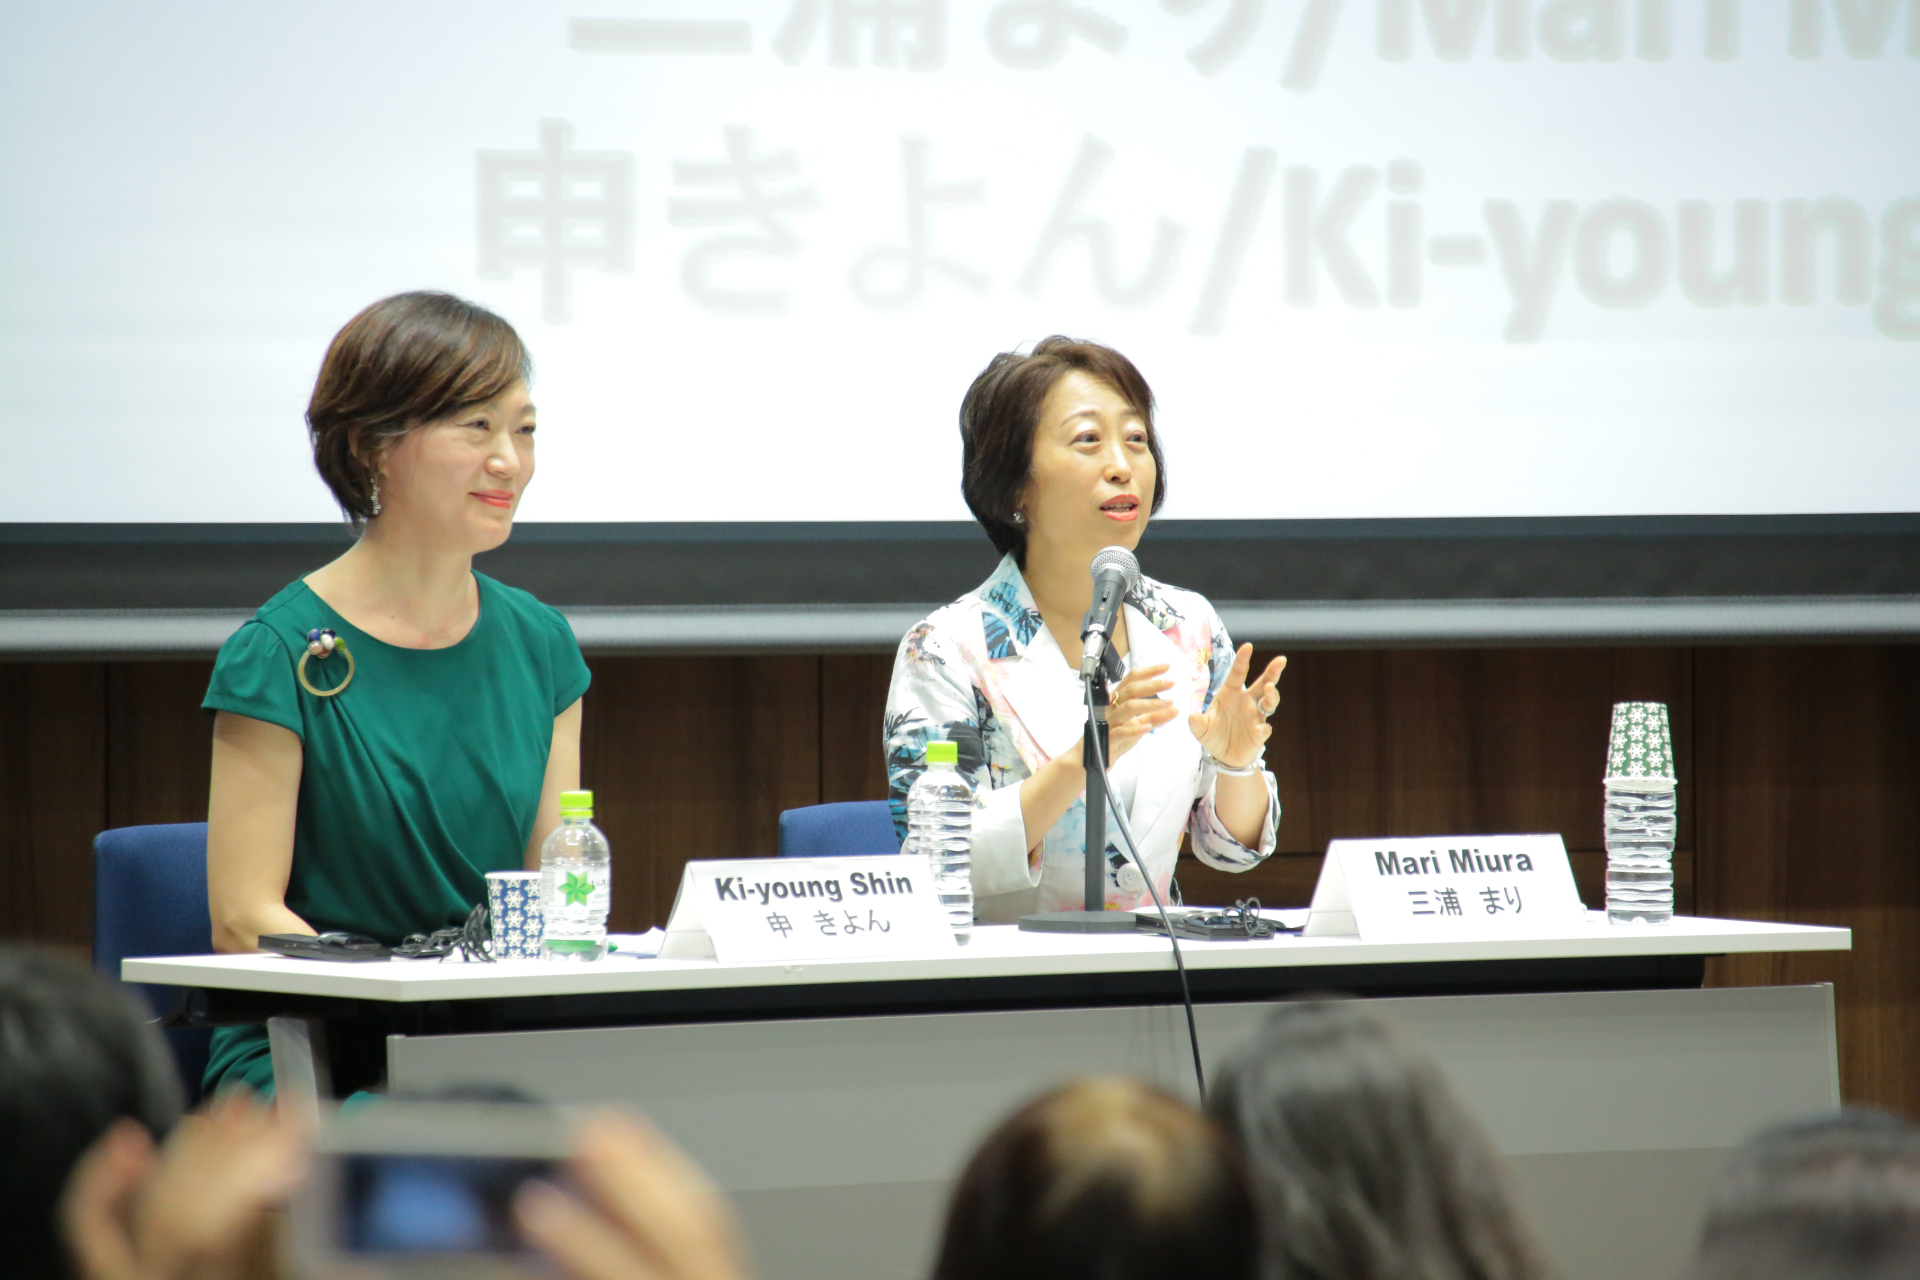 Dr. Ki-young Shin (left) and Dr. Mari Miura